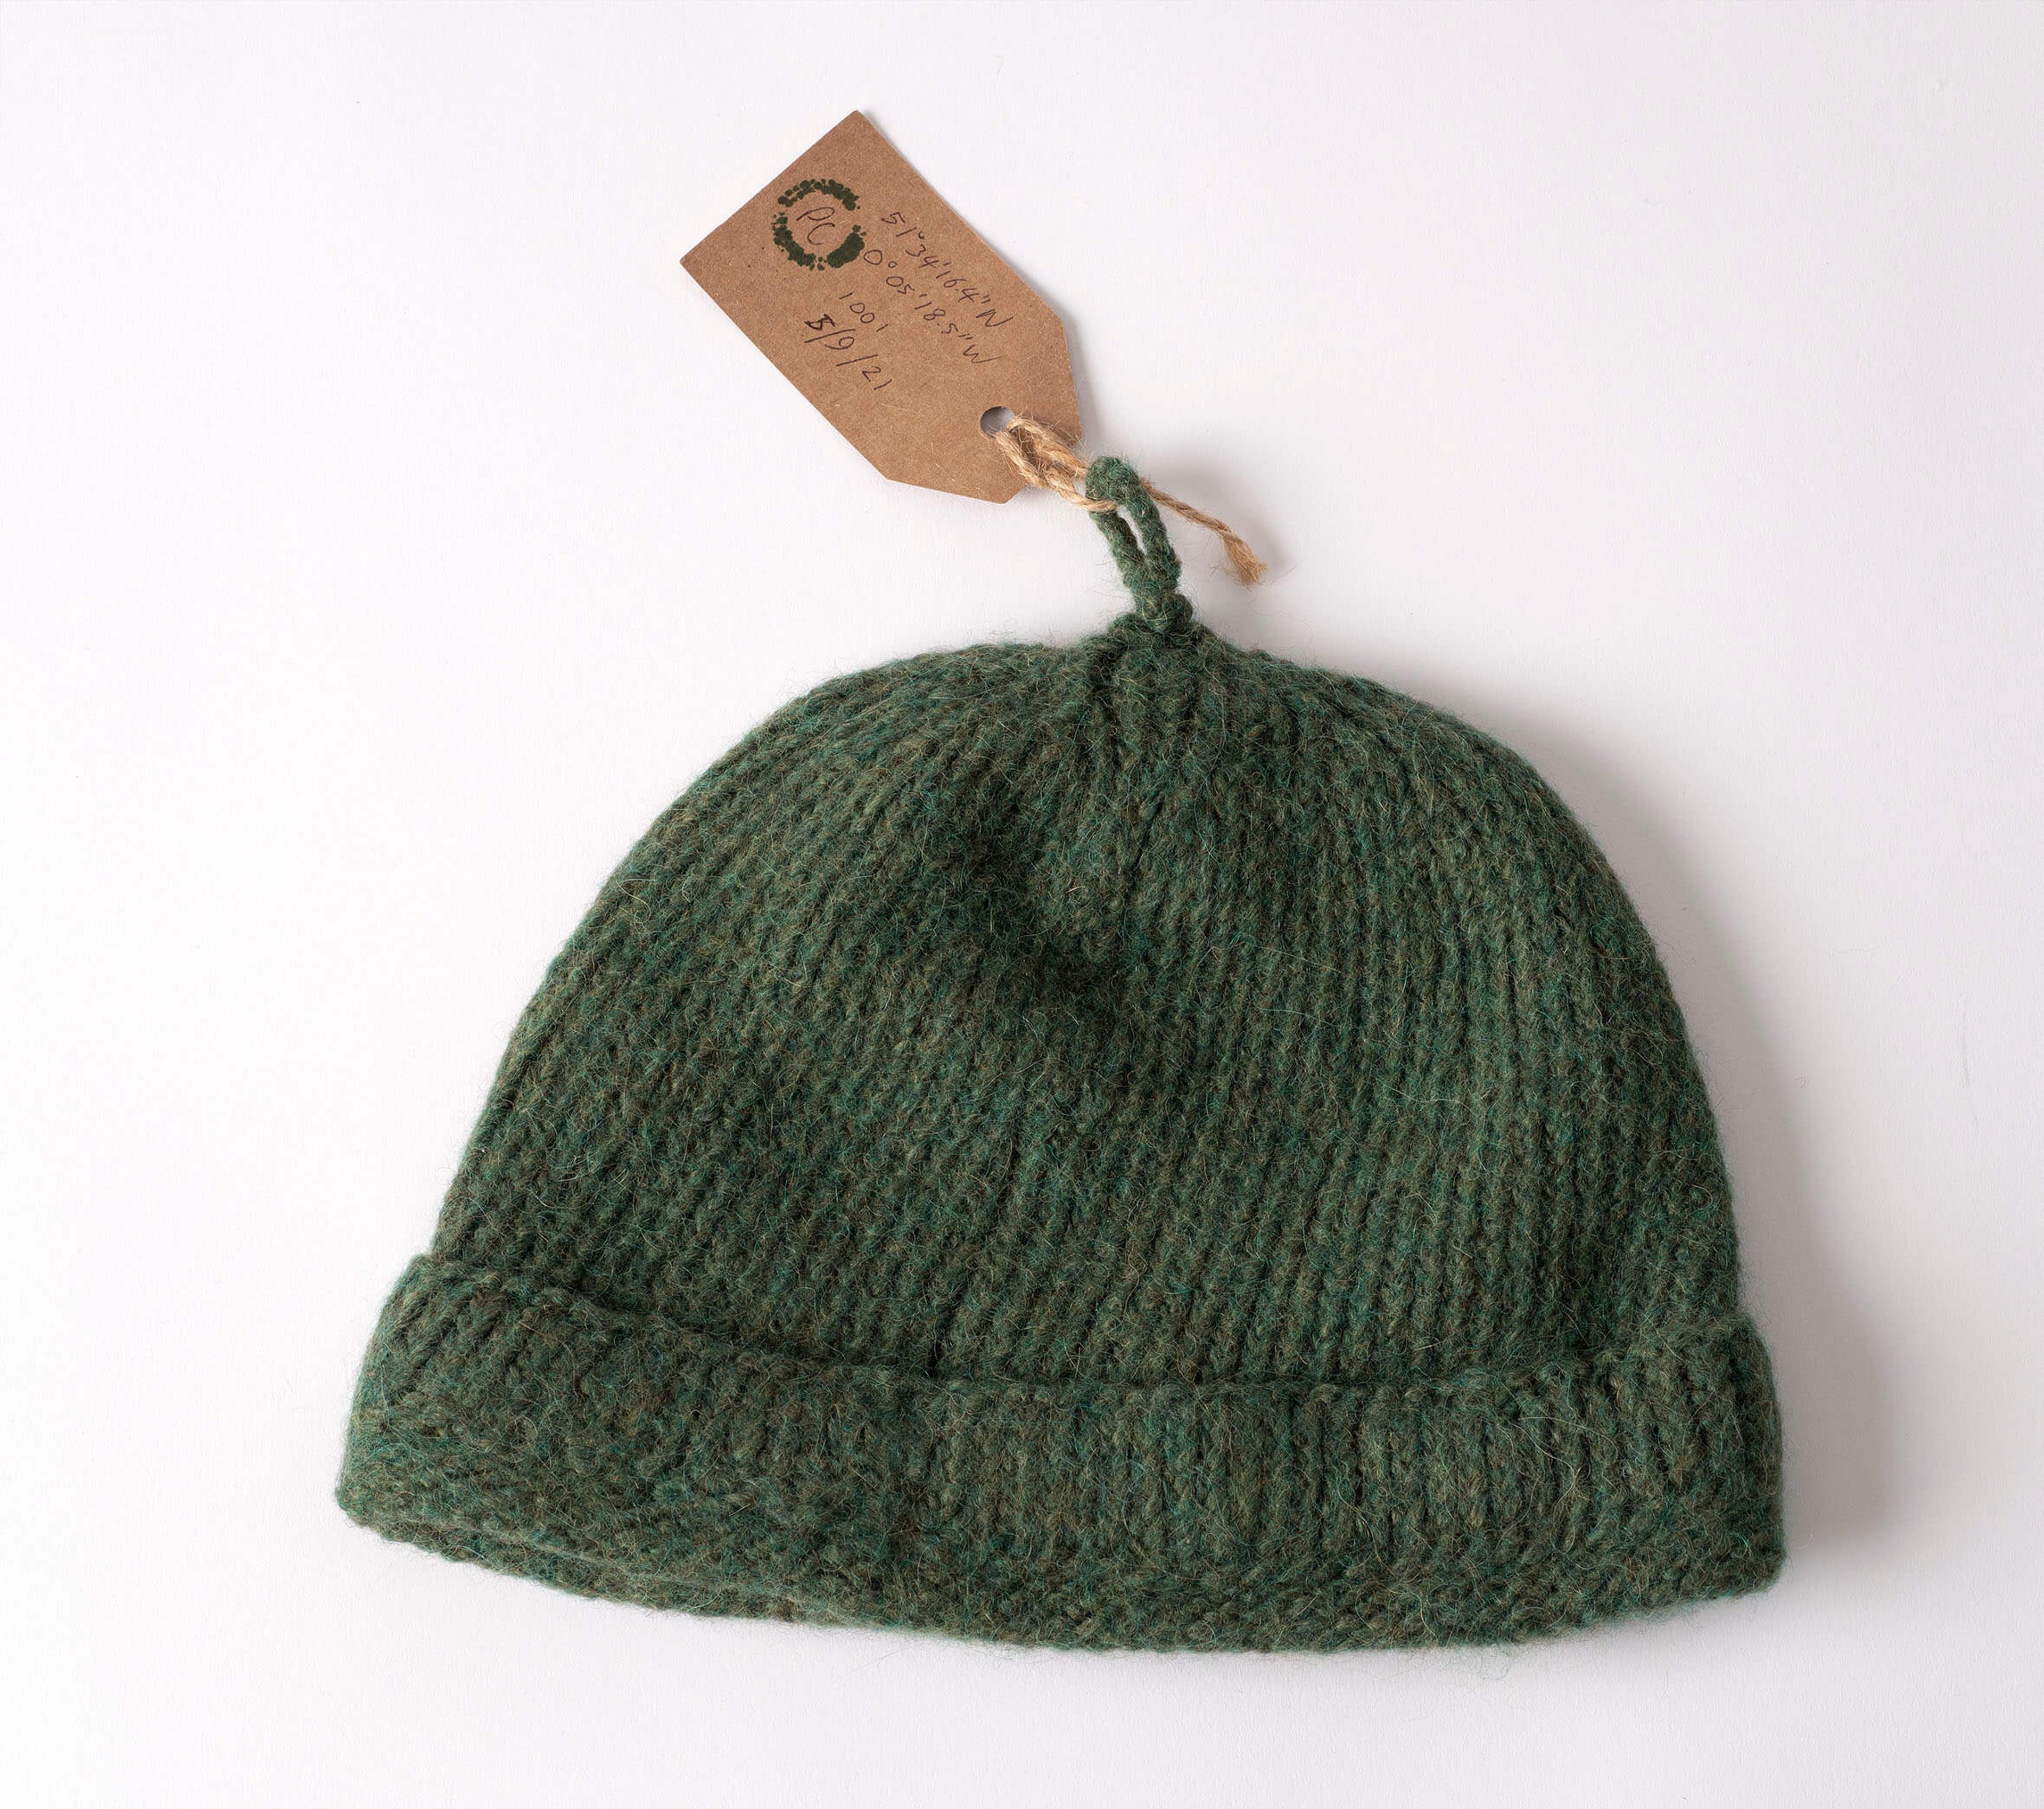 Photograph of a green knit cap.